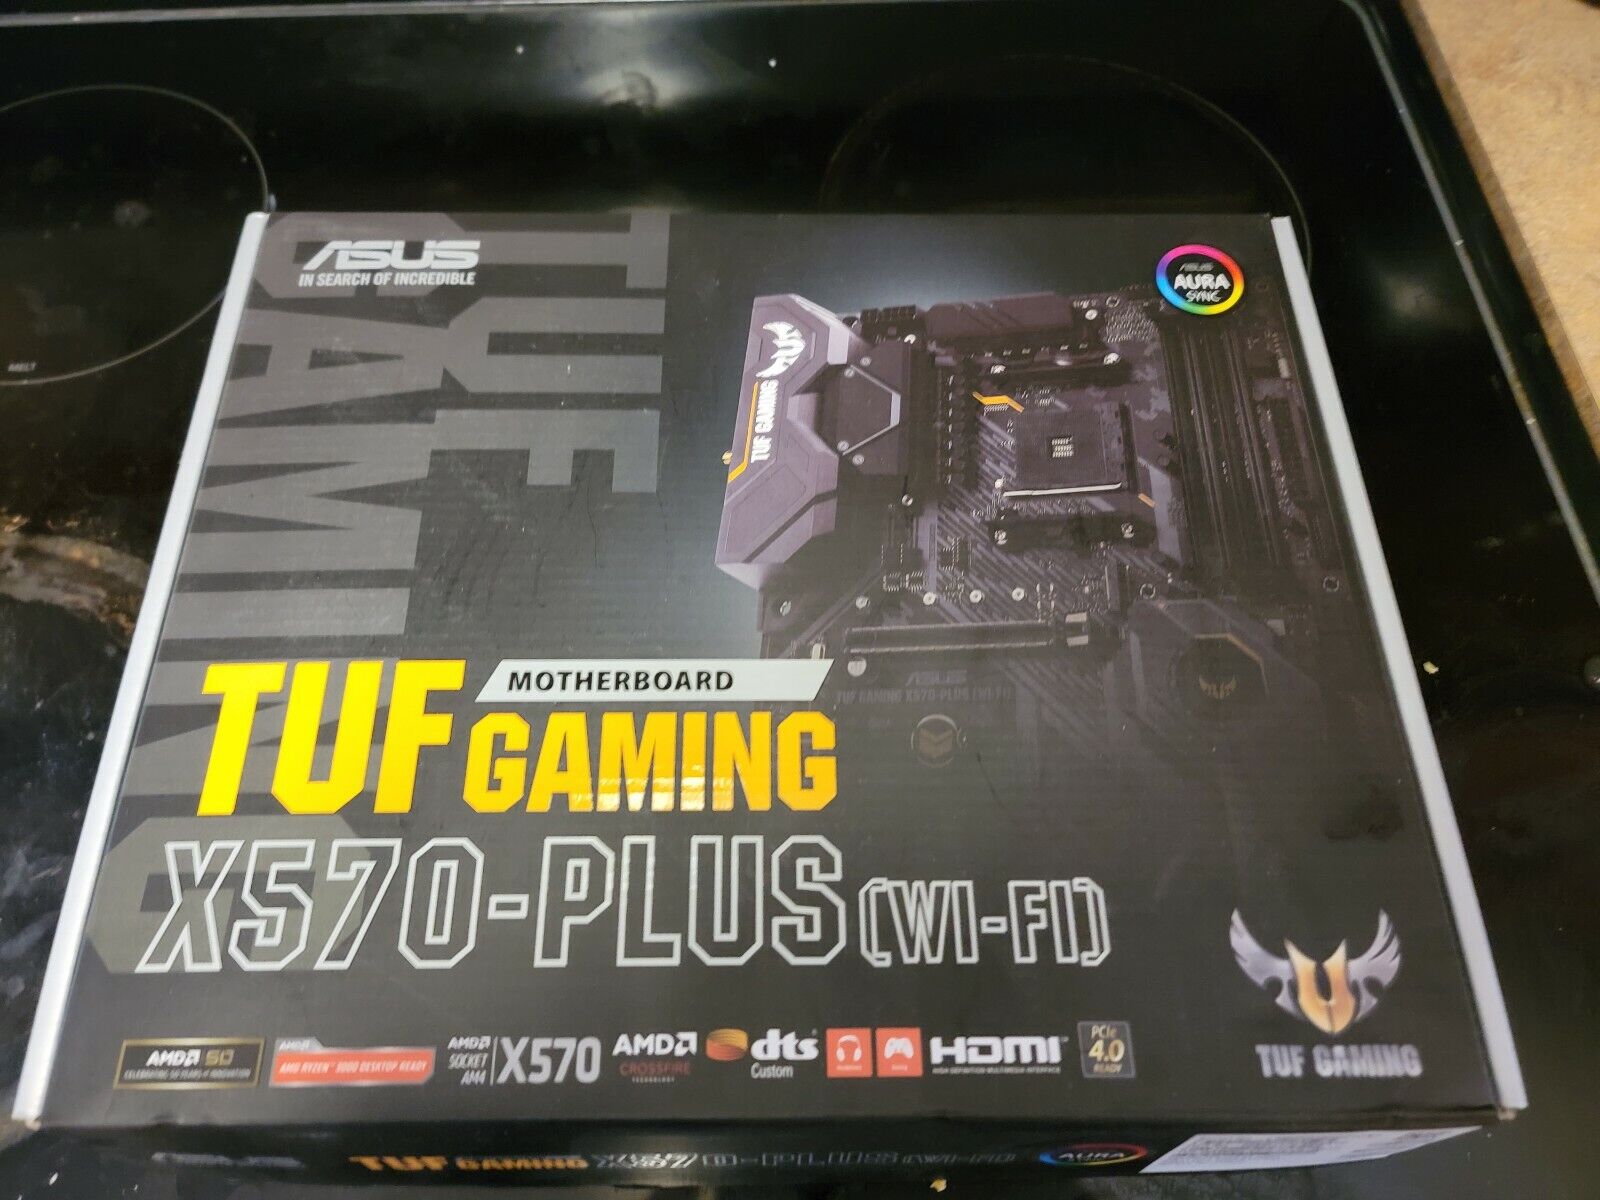 ASUS Tufgaming x570 plus Wifi AMD Am4 Processors 5000 series ready